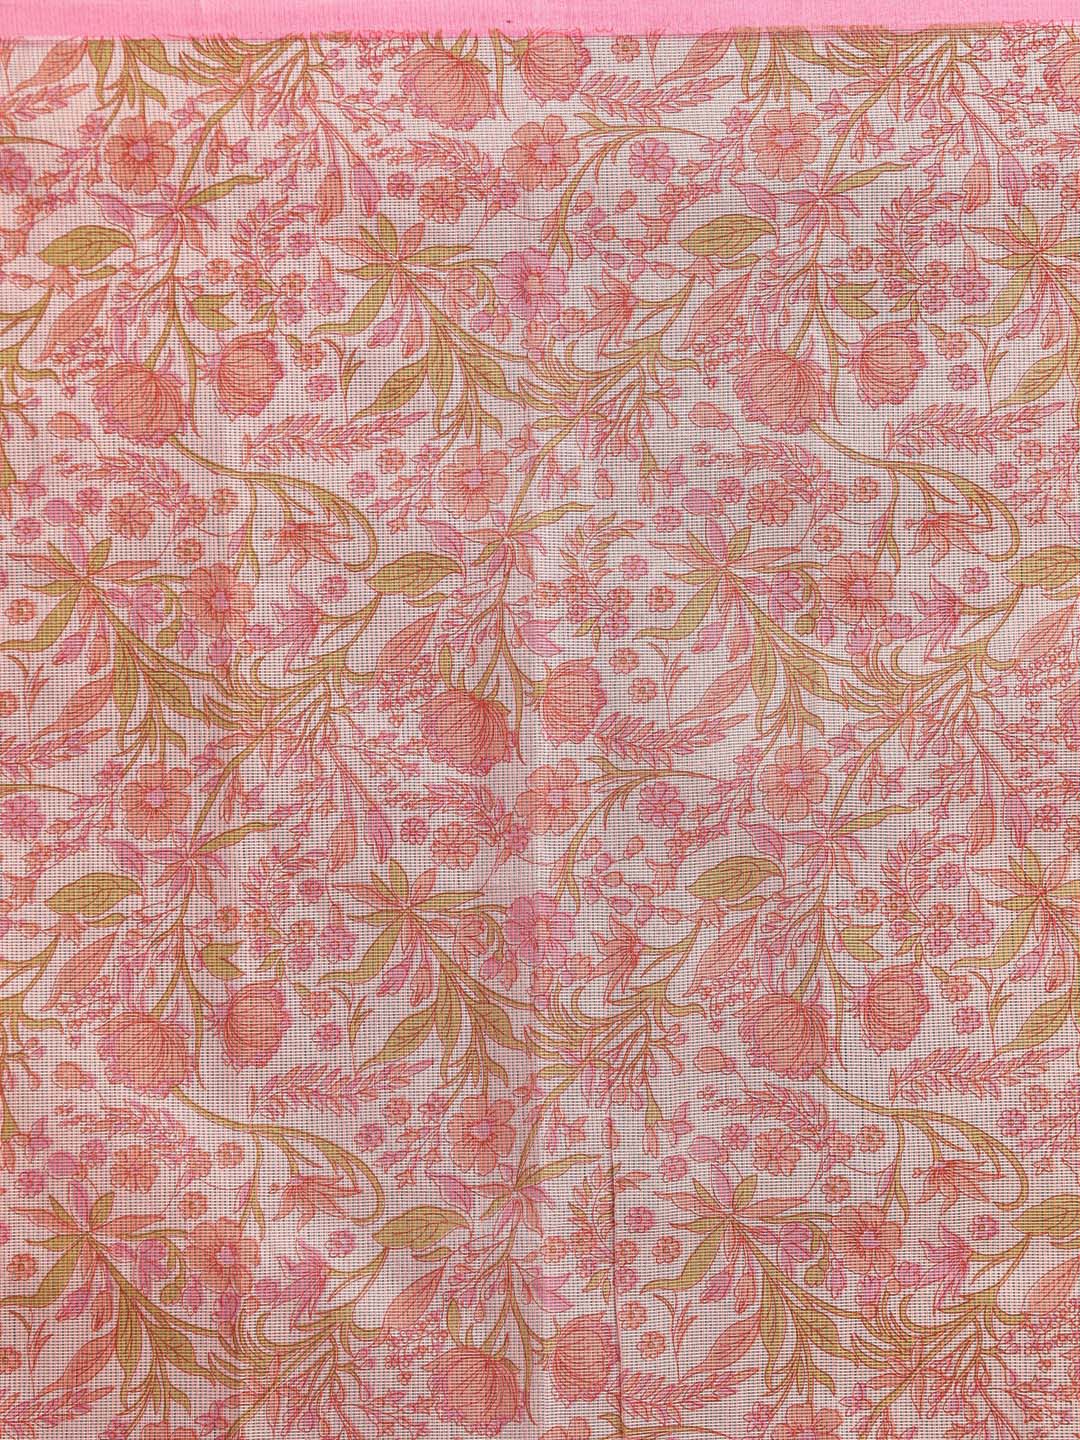 Indethnic Printed Super Net Saree in Peach - Saree Detail View